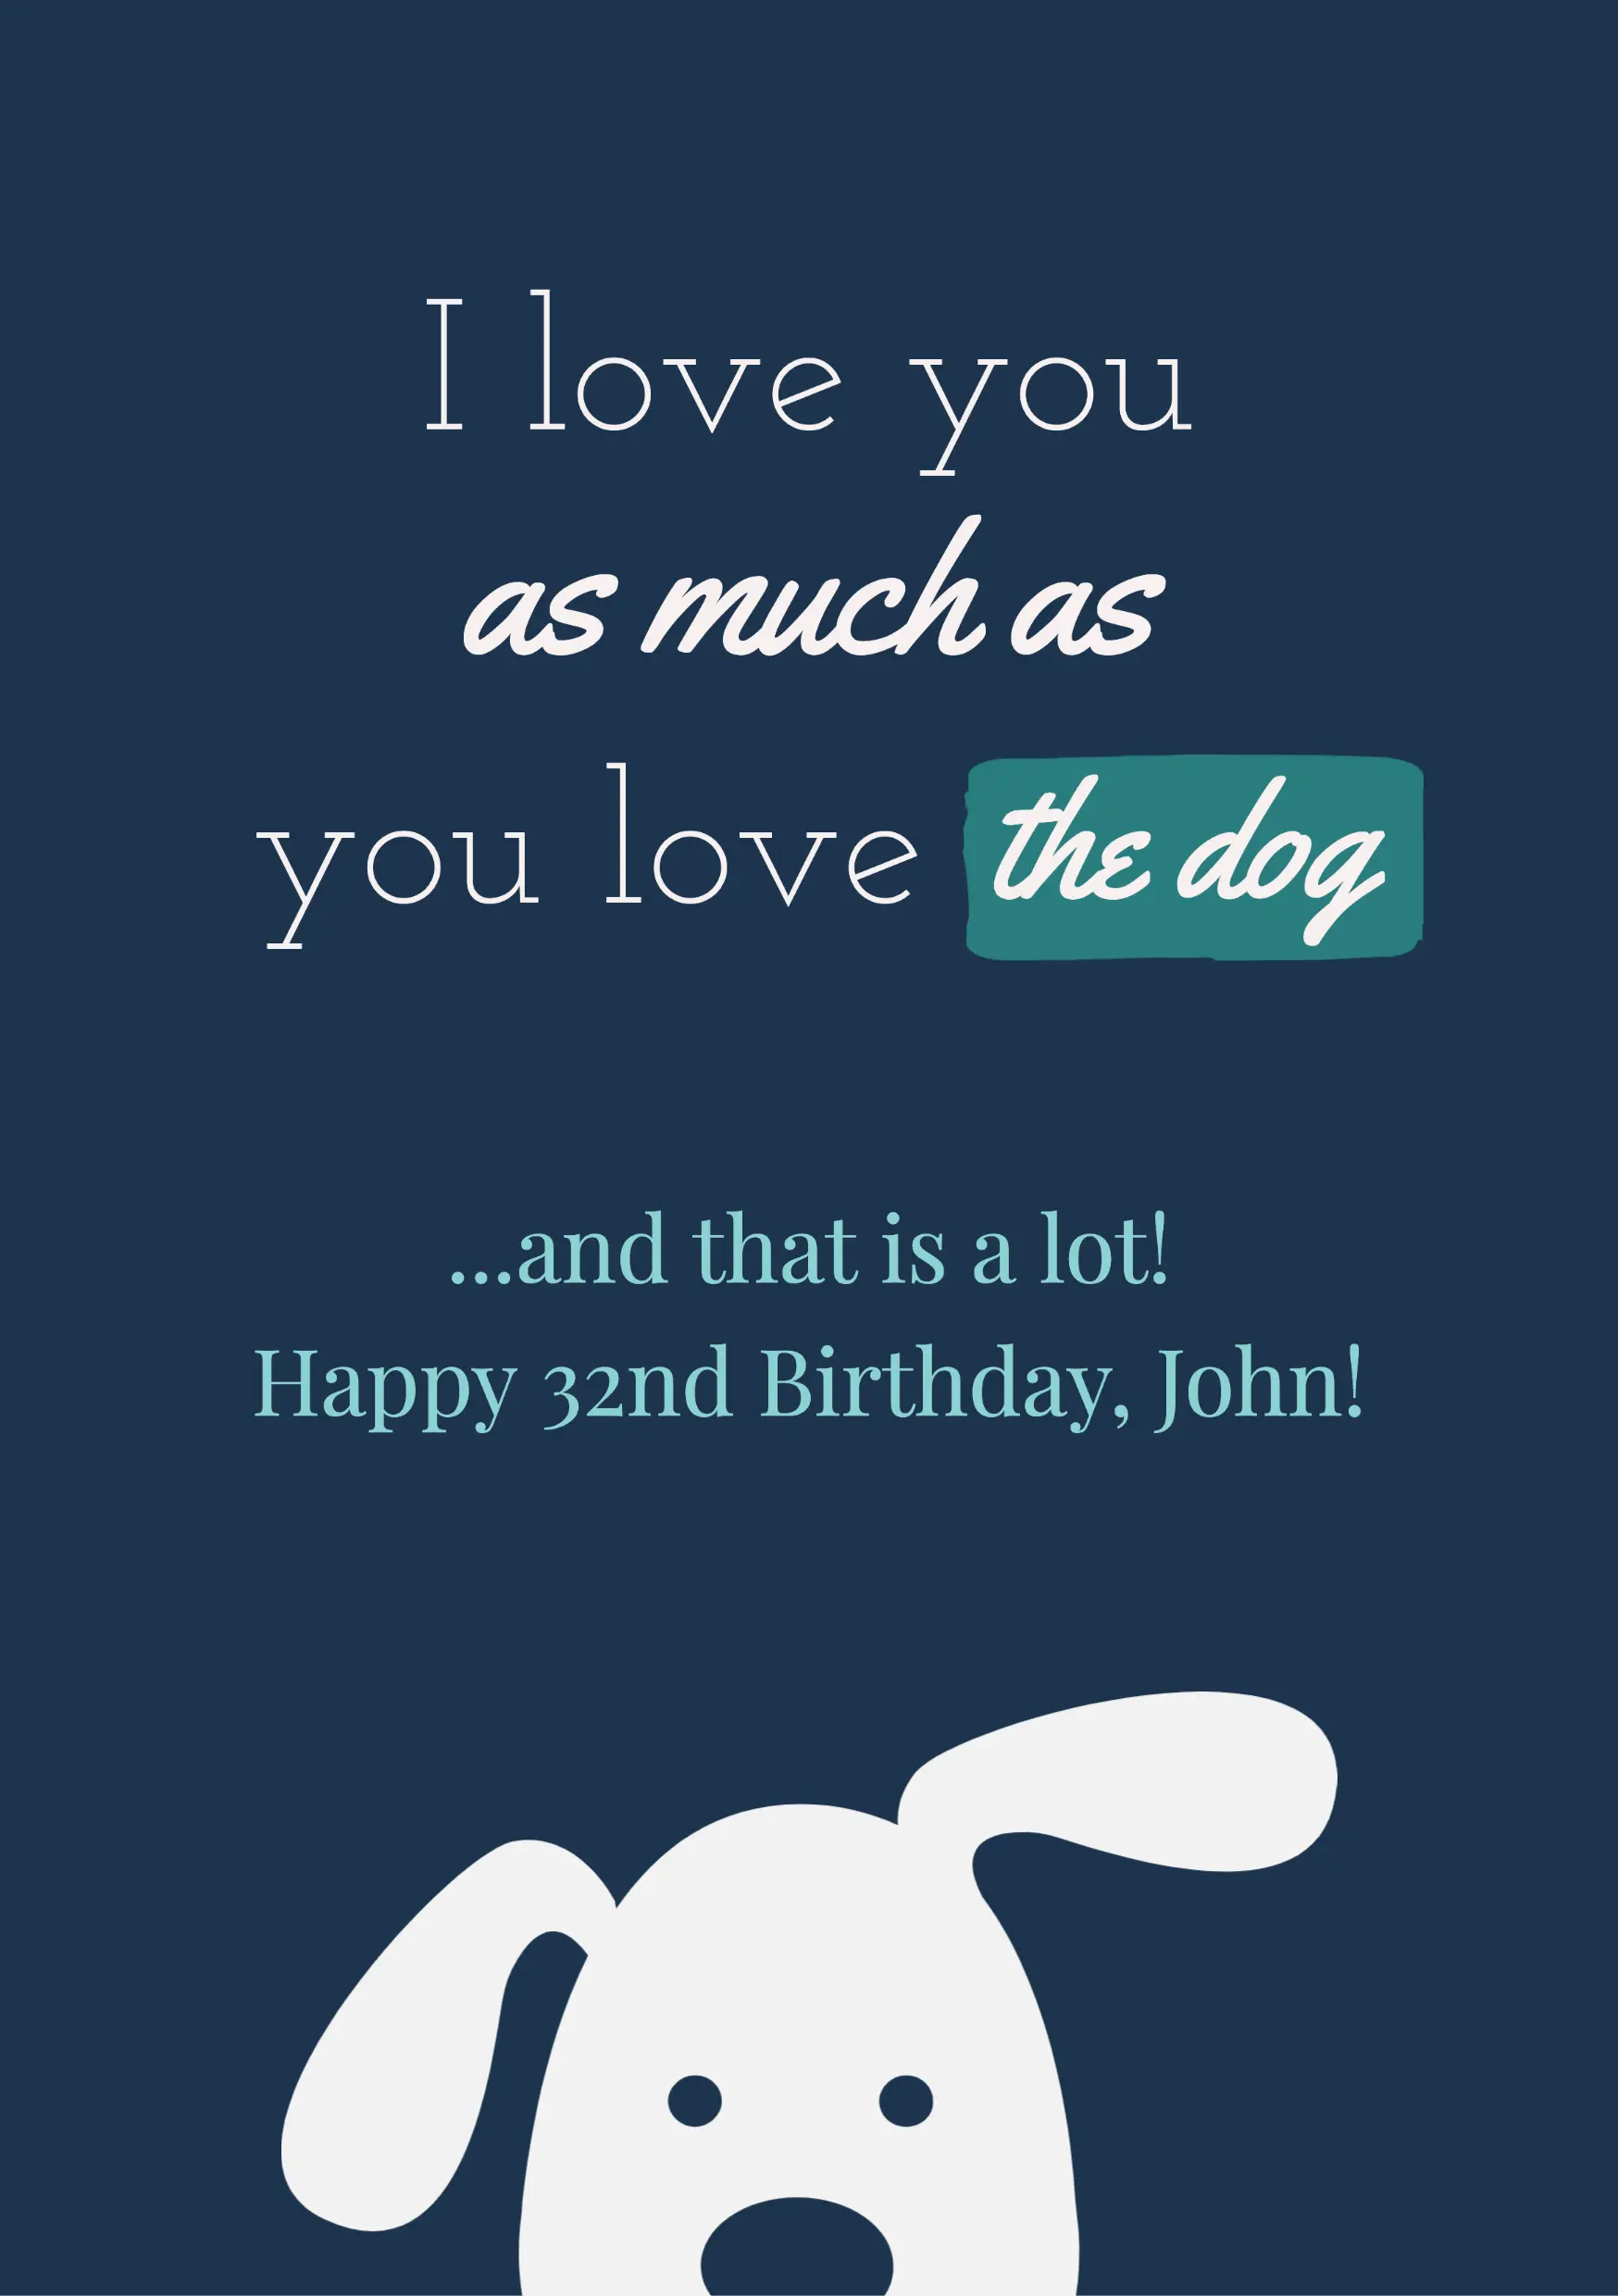 60 funny birthday card ideas to customize